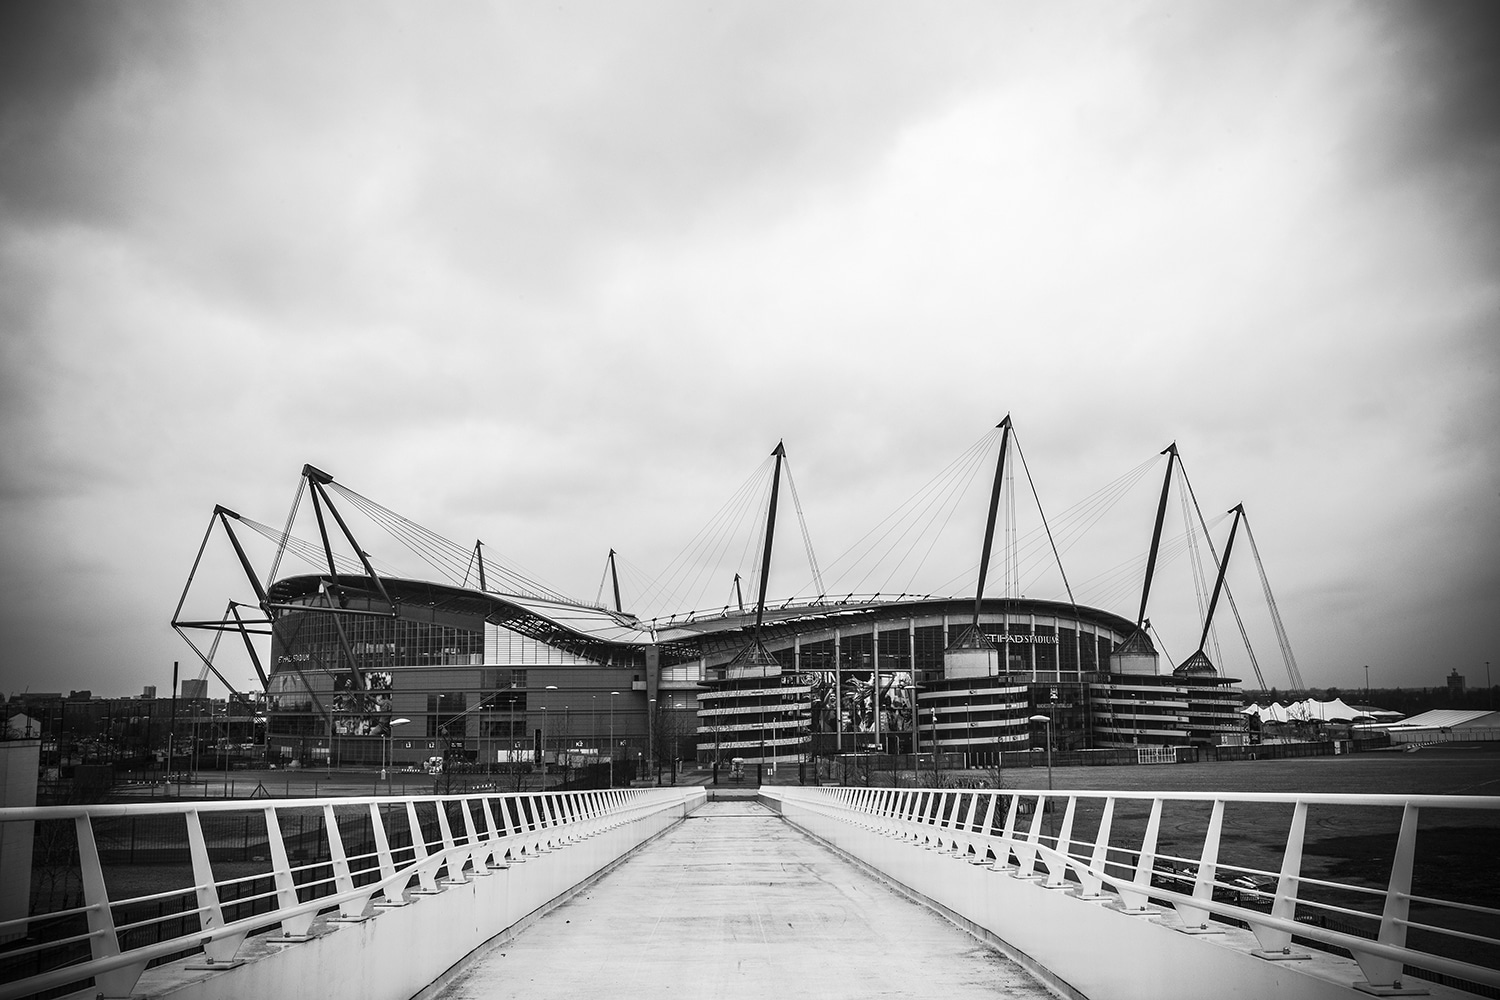 The Etihad Stadium Print Manchester Landscapes Architecture 2